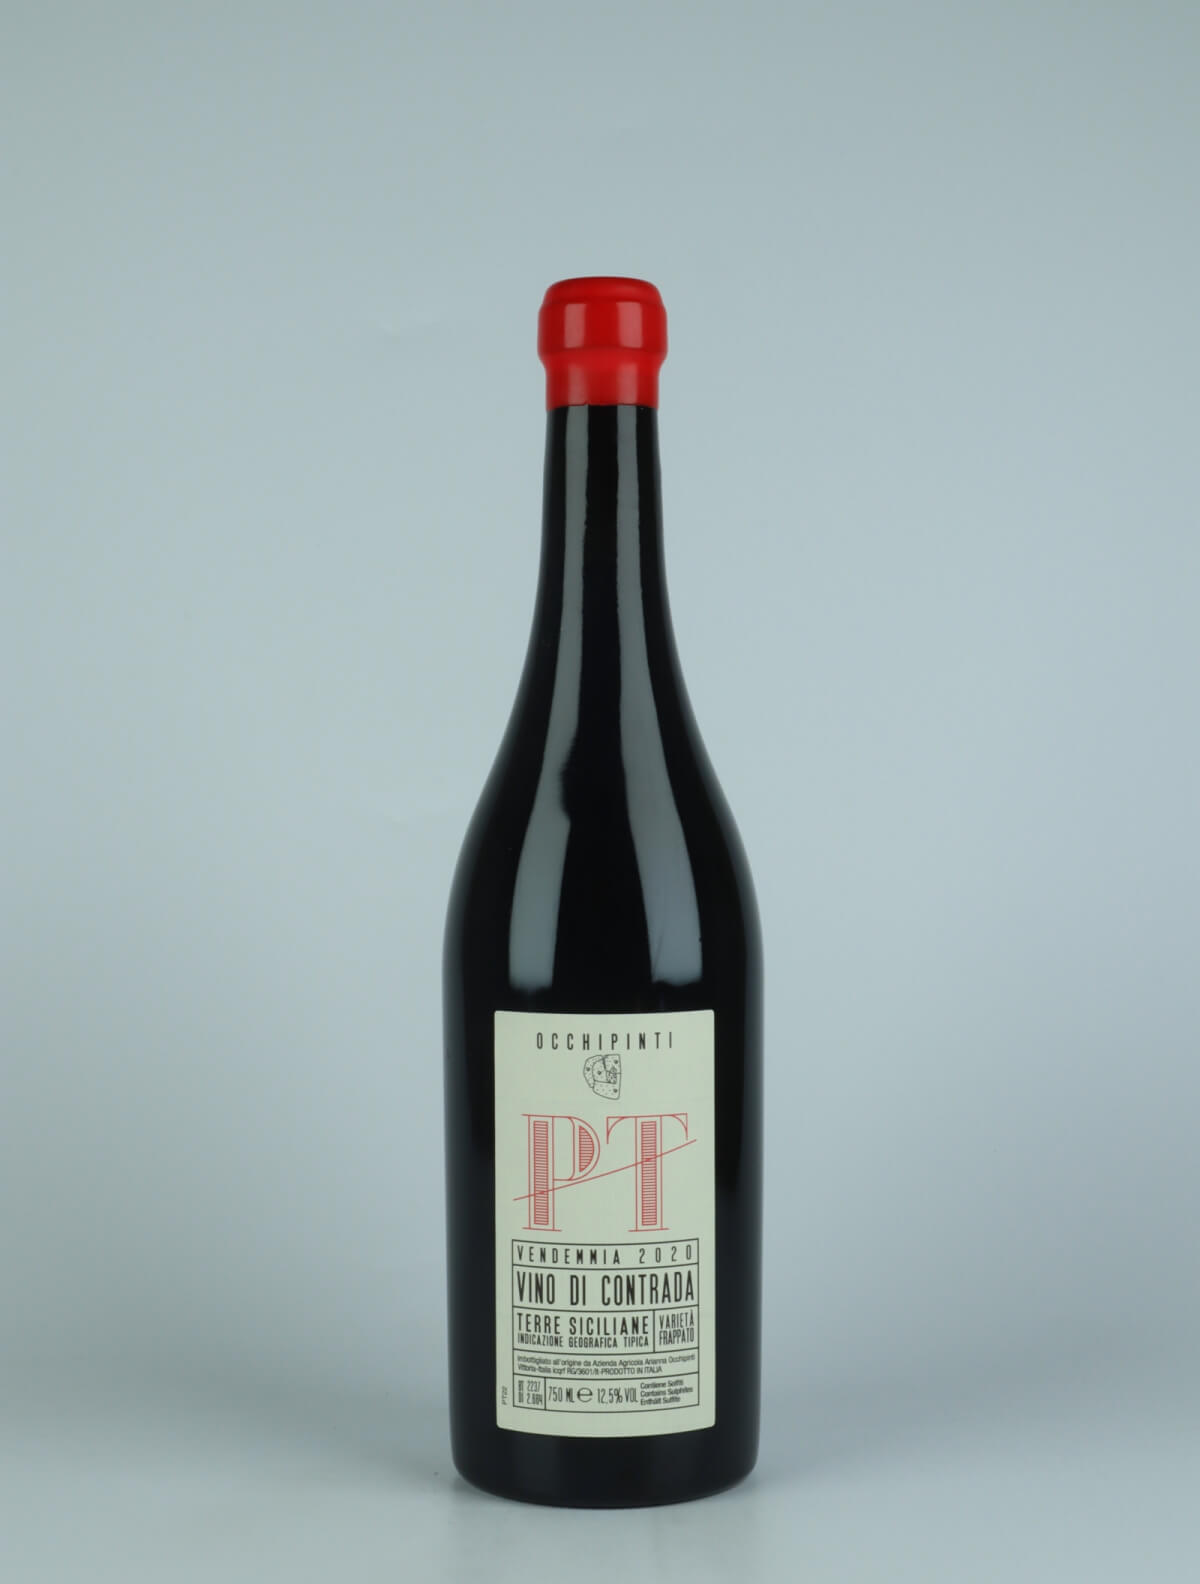 En flaske 2020 Pettineo Rødvin fra Arianna Occhipinti, Sicilien i Italien